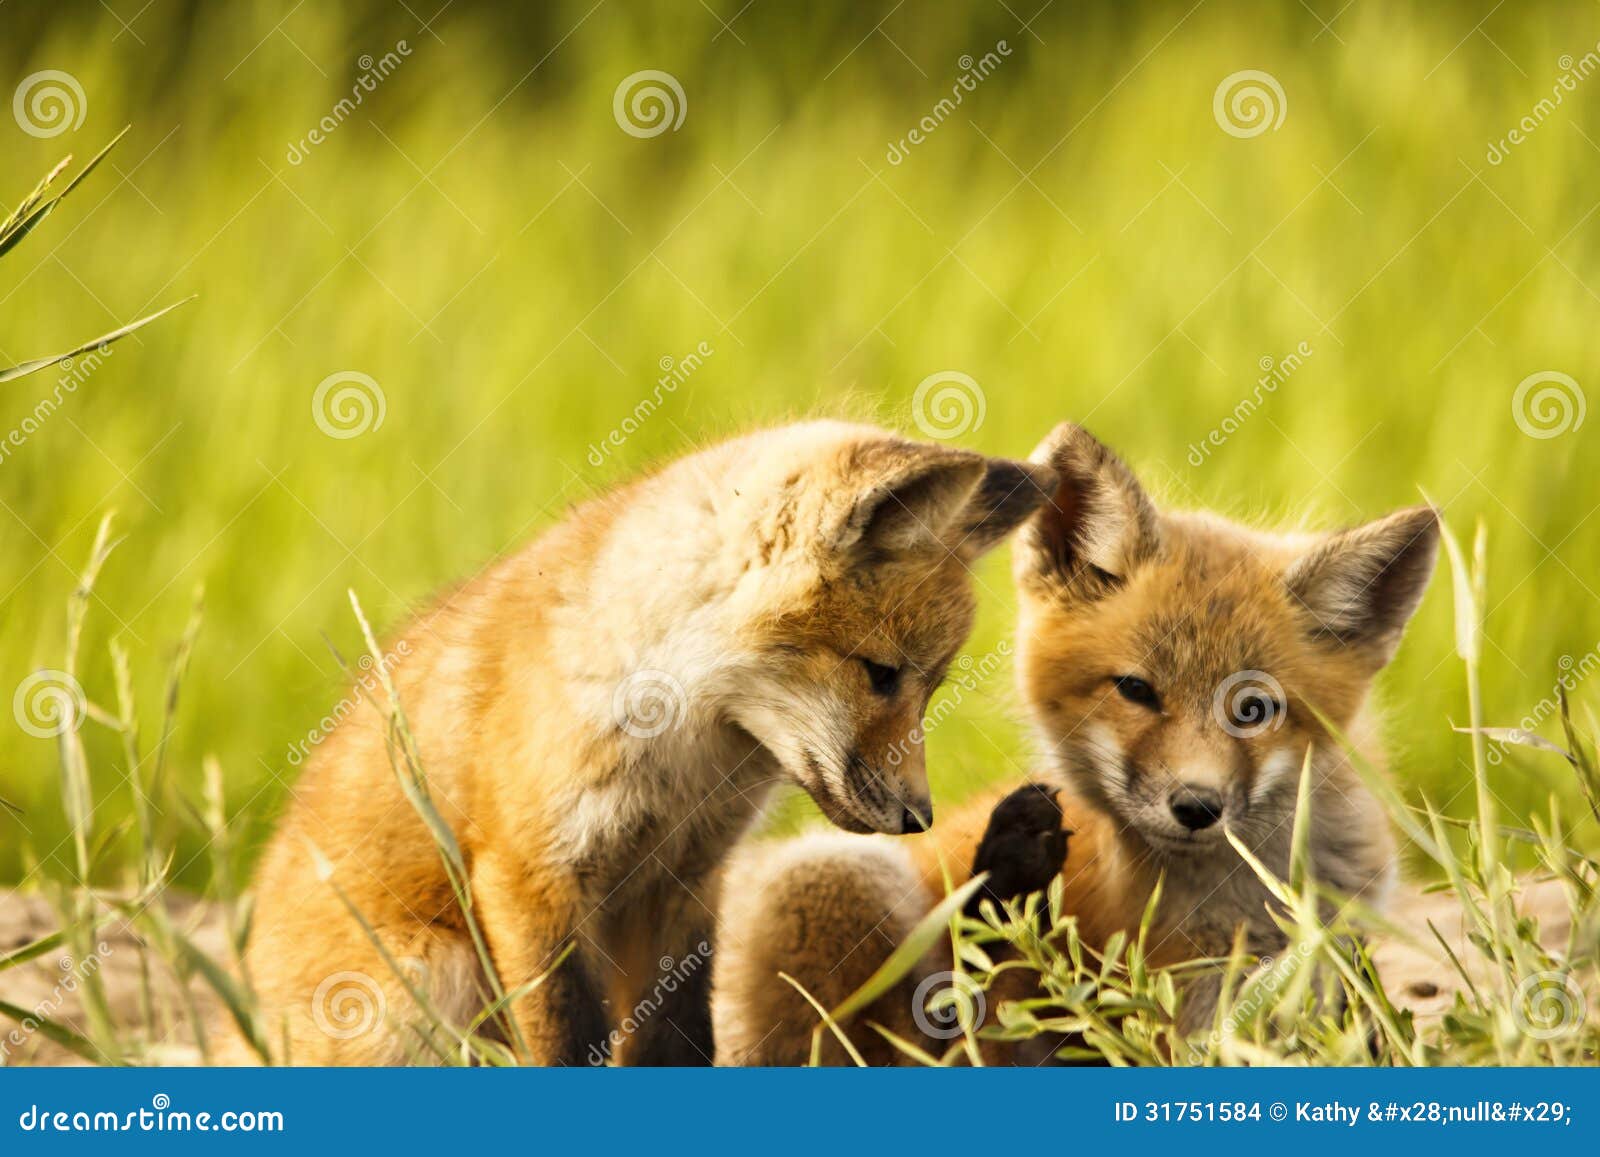 The fox and two babies. Лиса и Новорожденные лисы. Two Babies one Fox. 2 Babies 1 Fox.